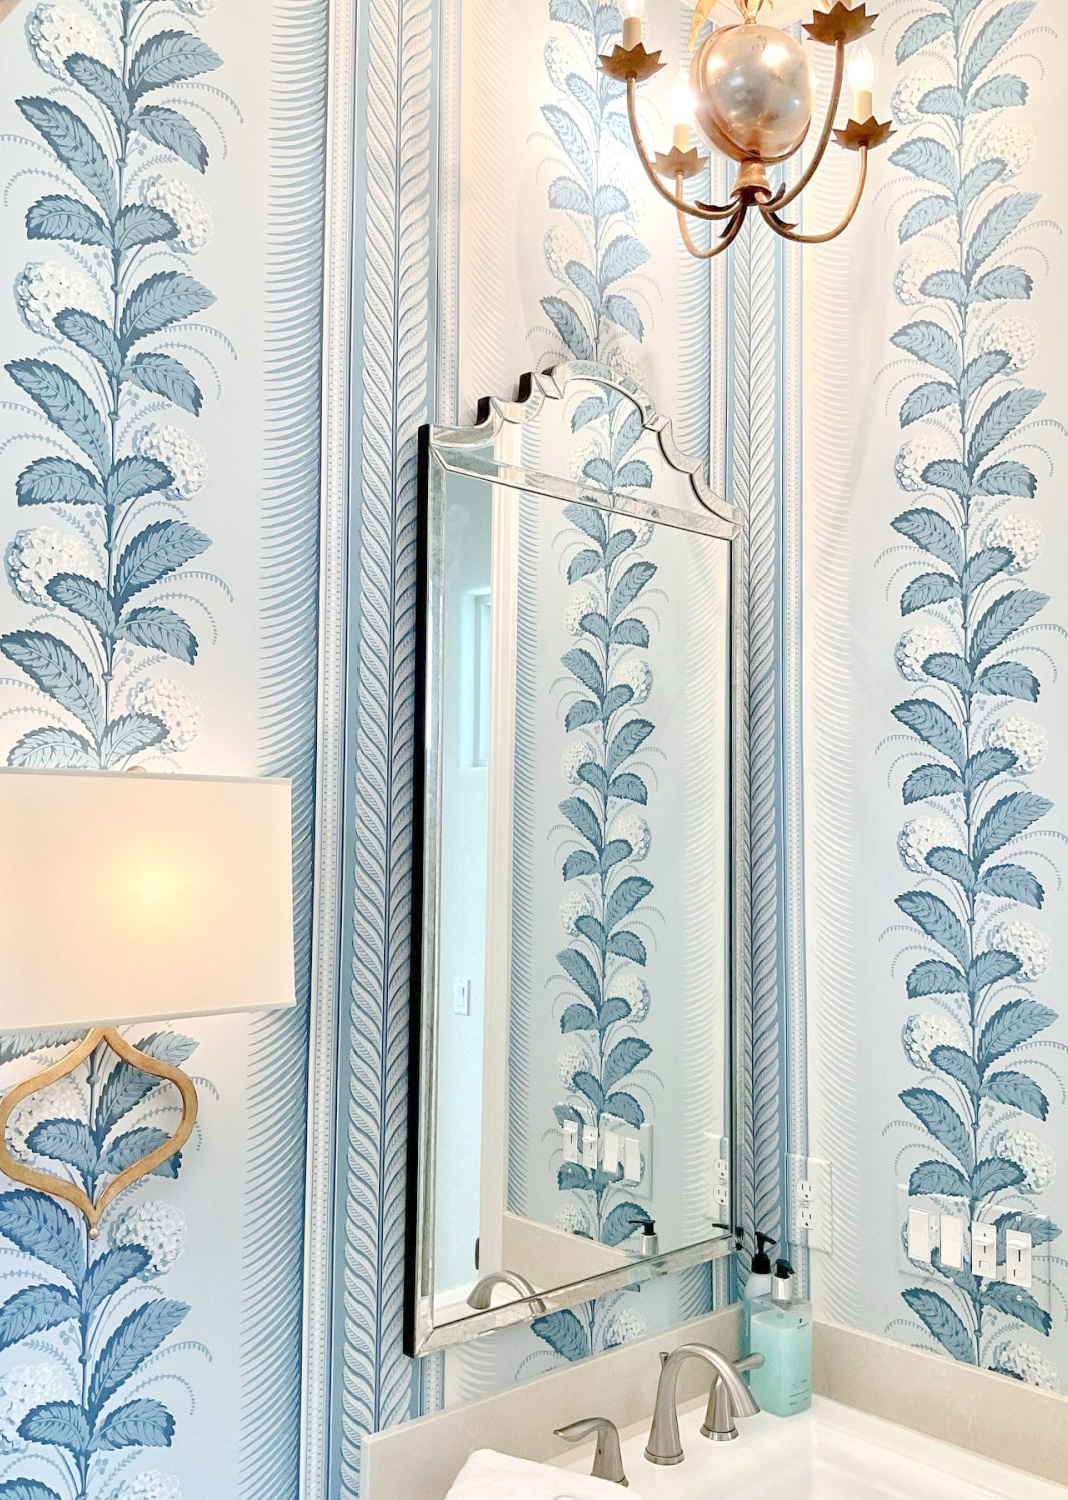 Schumacher Hydrangea Drape (Delft) wallpaper in a bath by Kathy Sue (GoodlifeofDesign). #schumacherwallpaper #hydrangeadrape #blueehydrangeawallpaper #bluebath